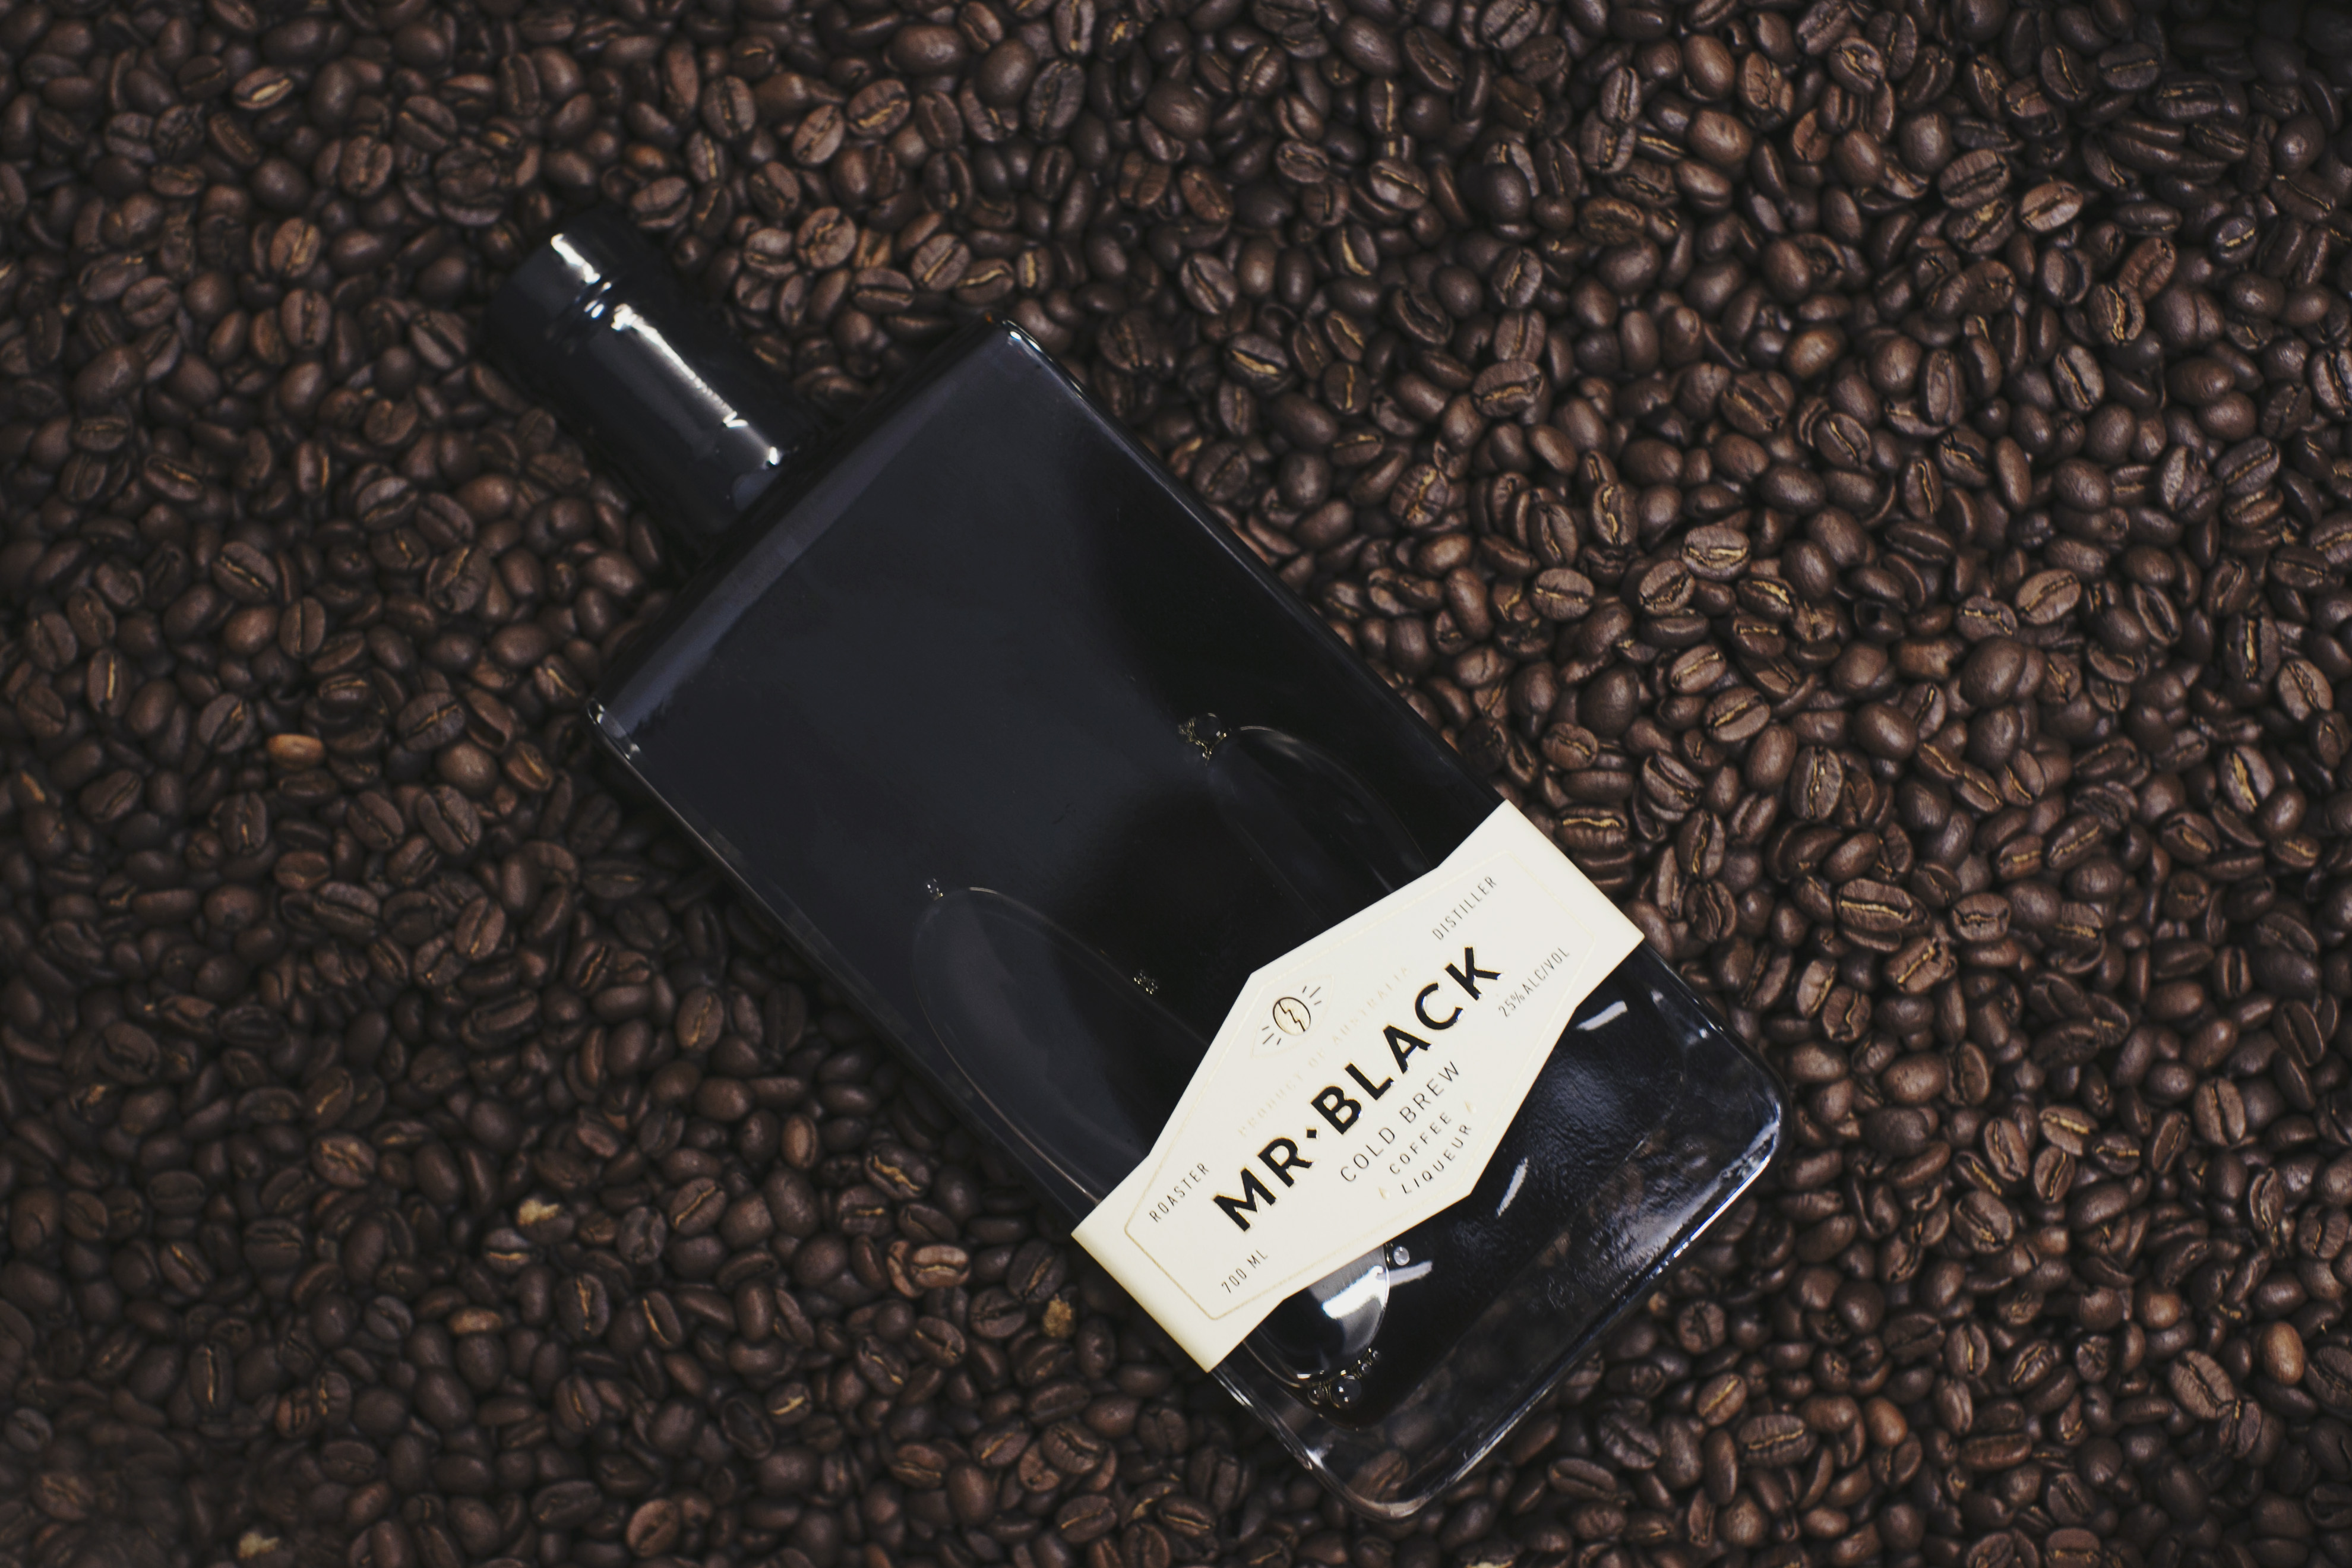 Bottle of Mr. Black on coffee beans